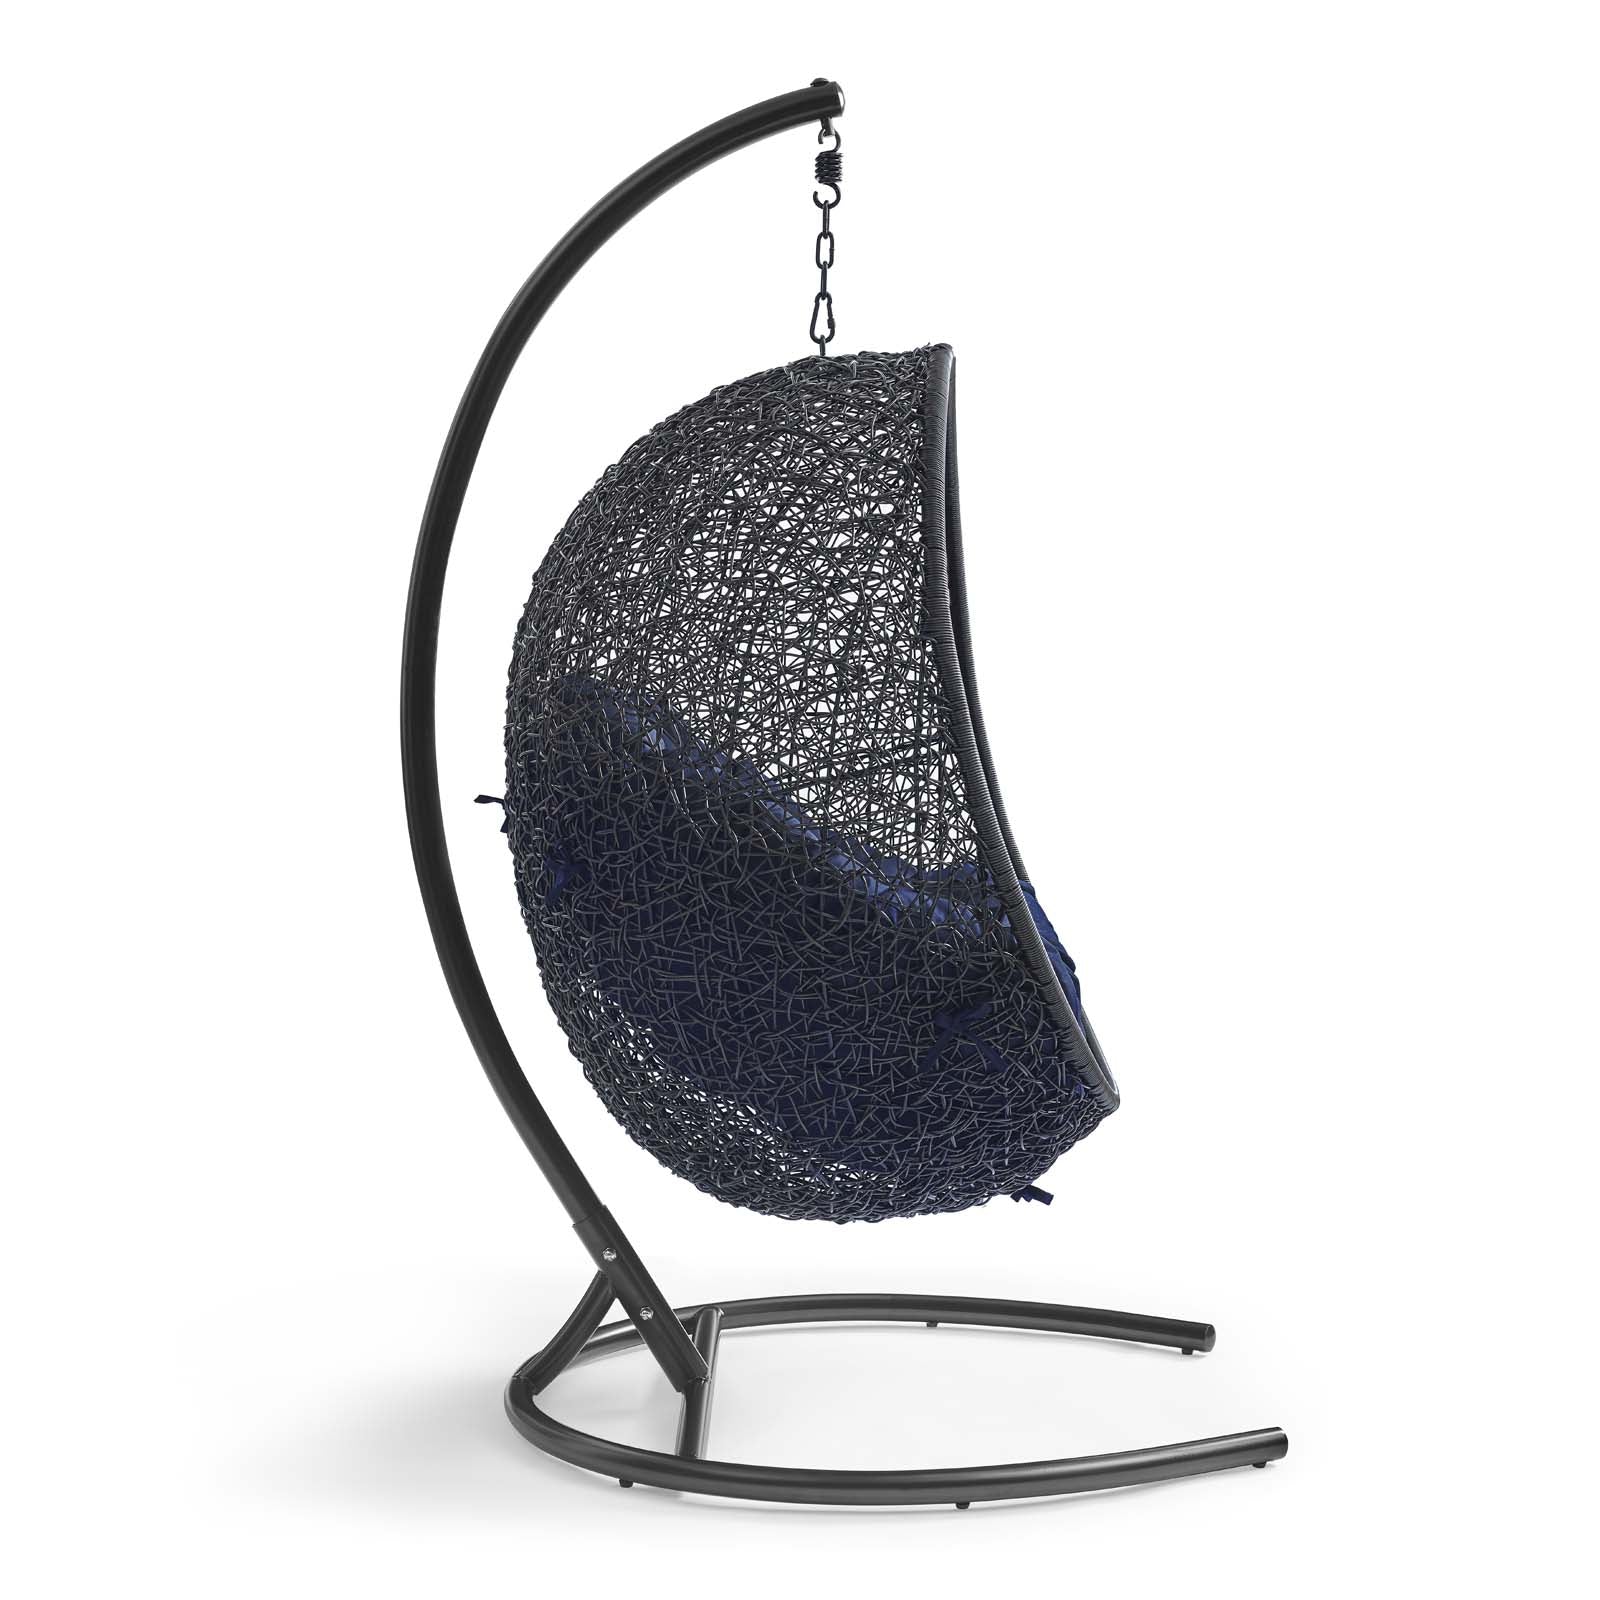 Modway Outdoor Swings - Encase Sunbrella Swing Outdoor Patio Lounge Chair Black Navy